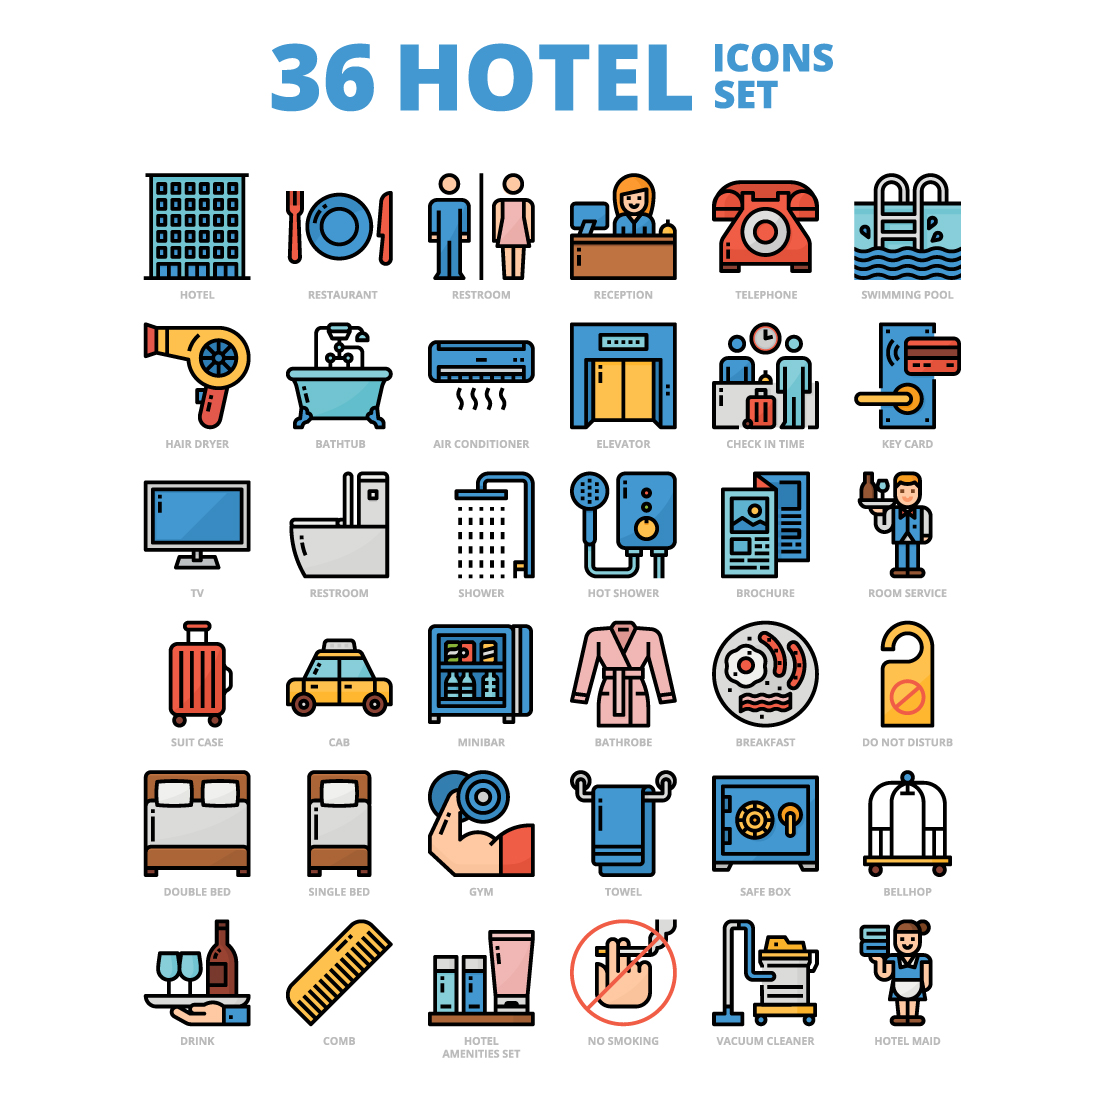 36 Hotel Icons Set x 4 Styles - MasterBundles